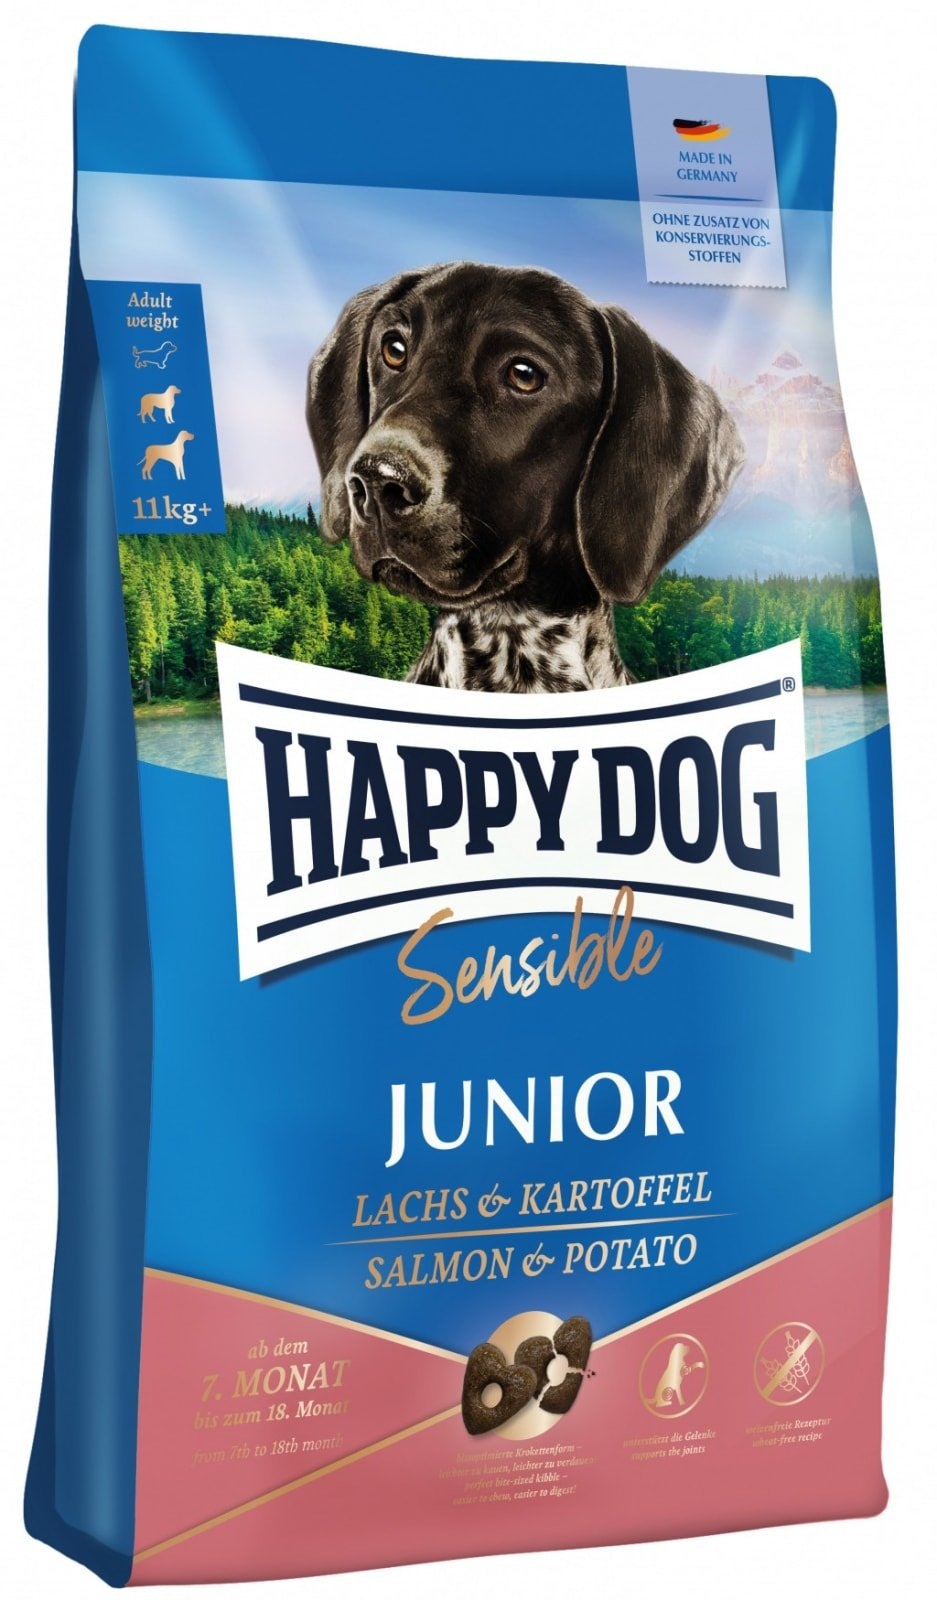 Puppy & Junior - Fuglogdyreutstyrs butik